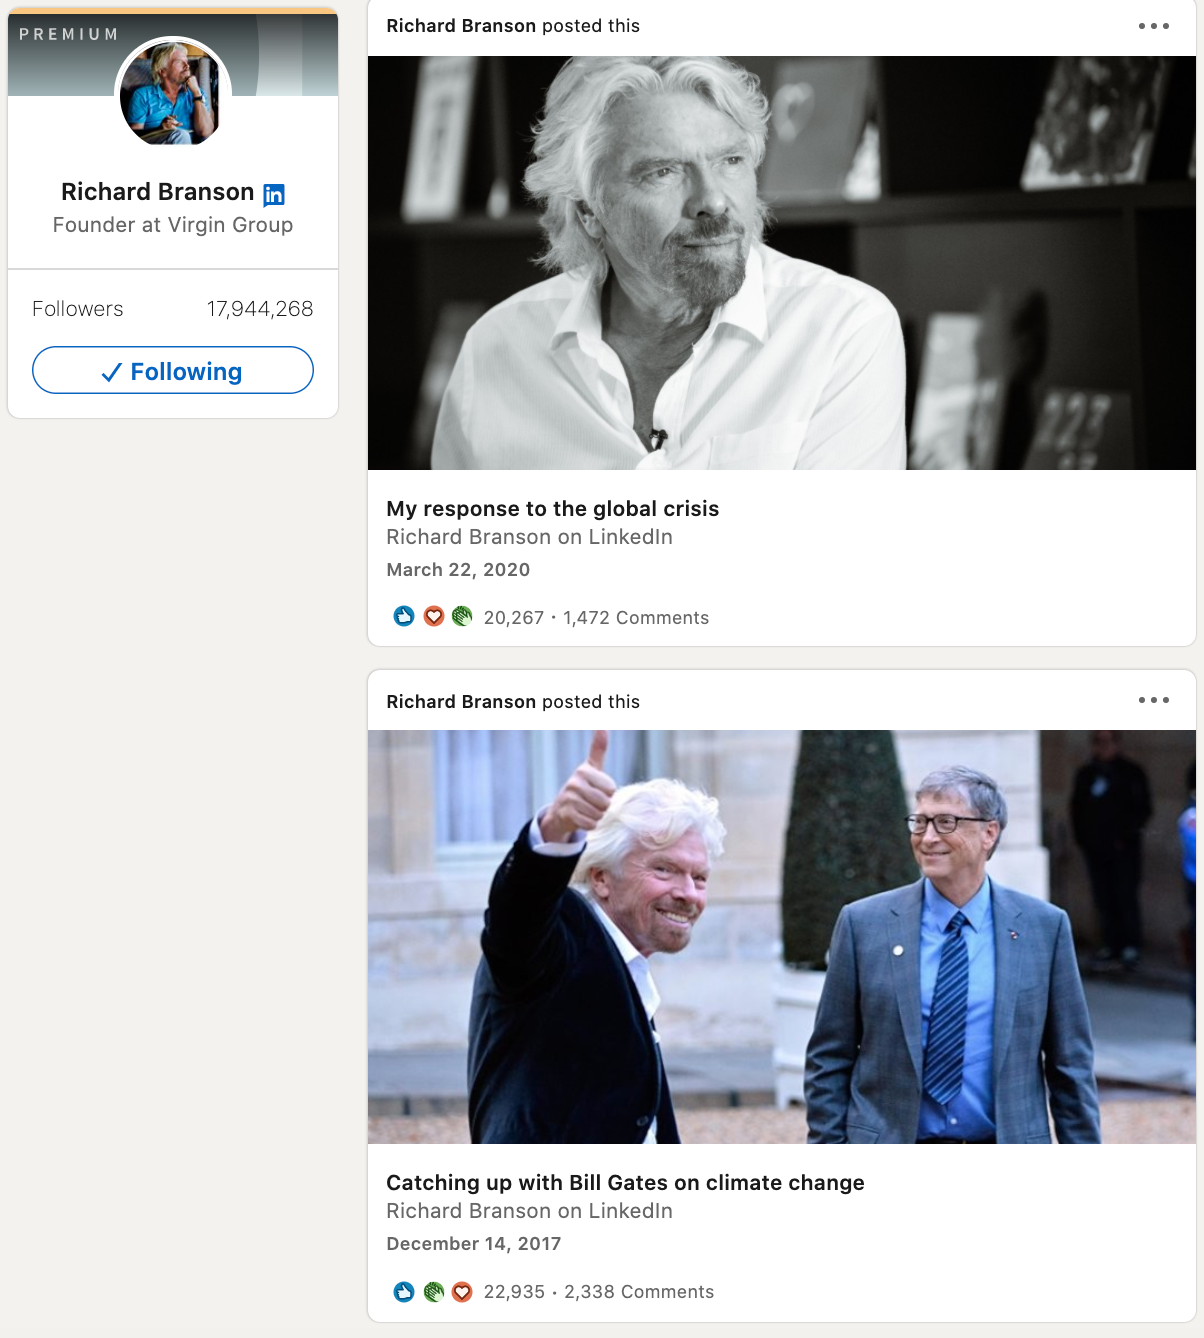 Richard Branson's LinkedIn page